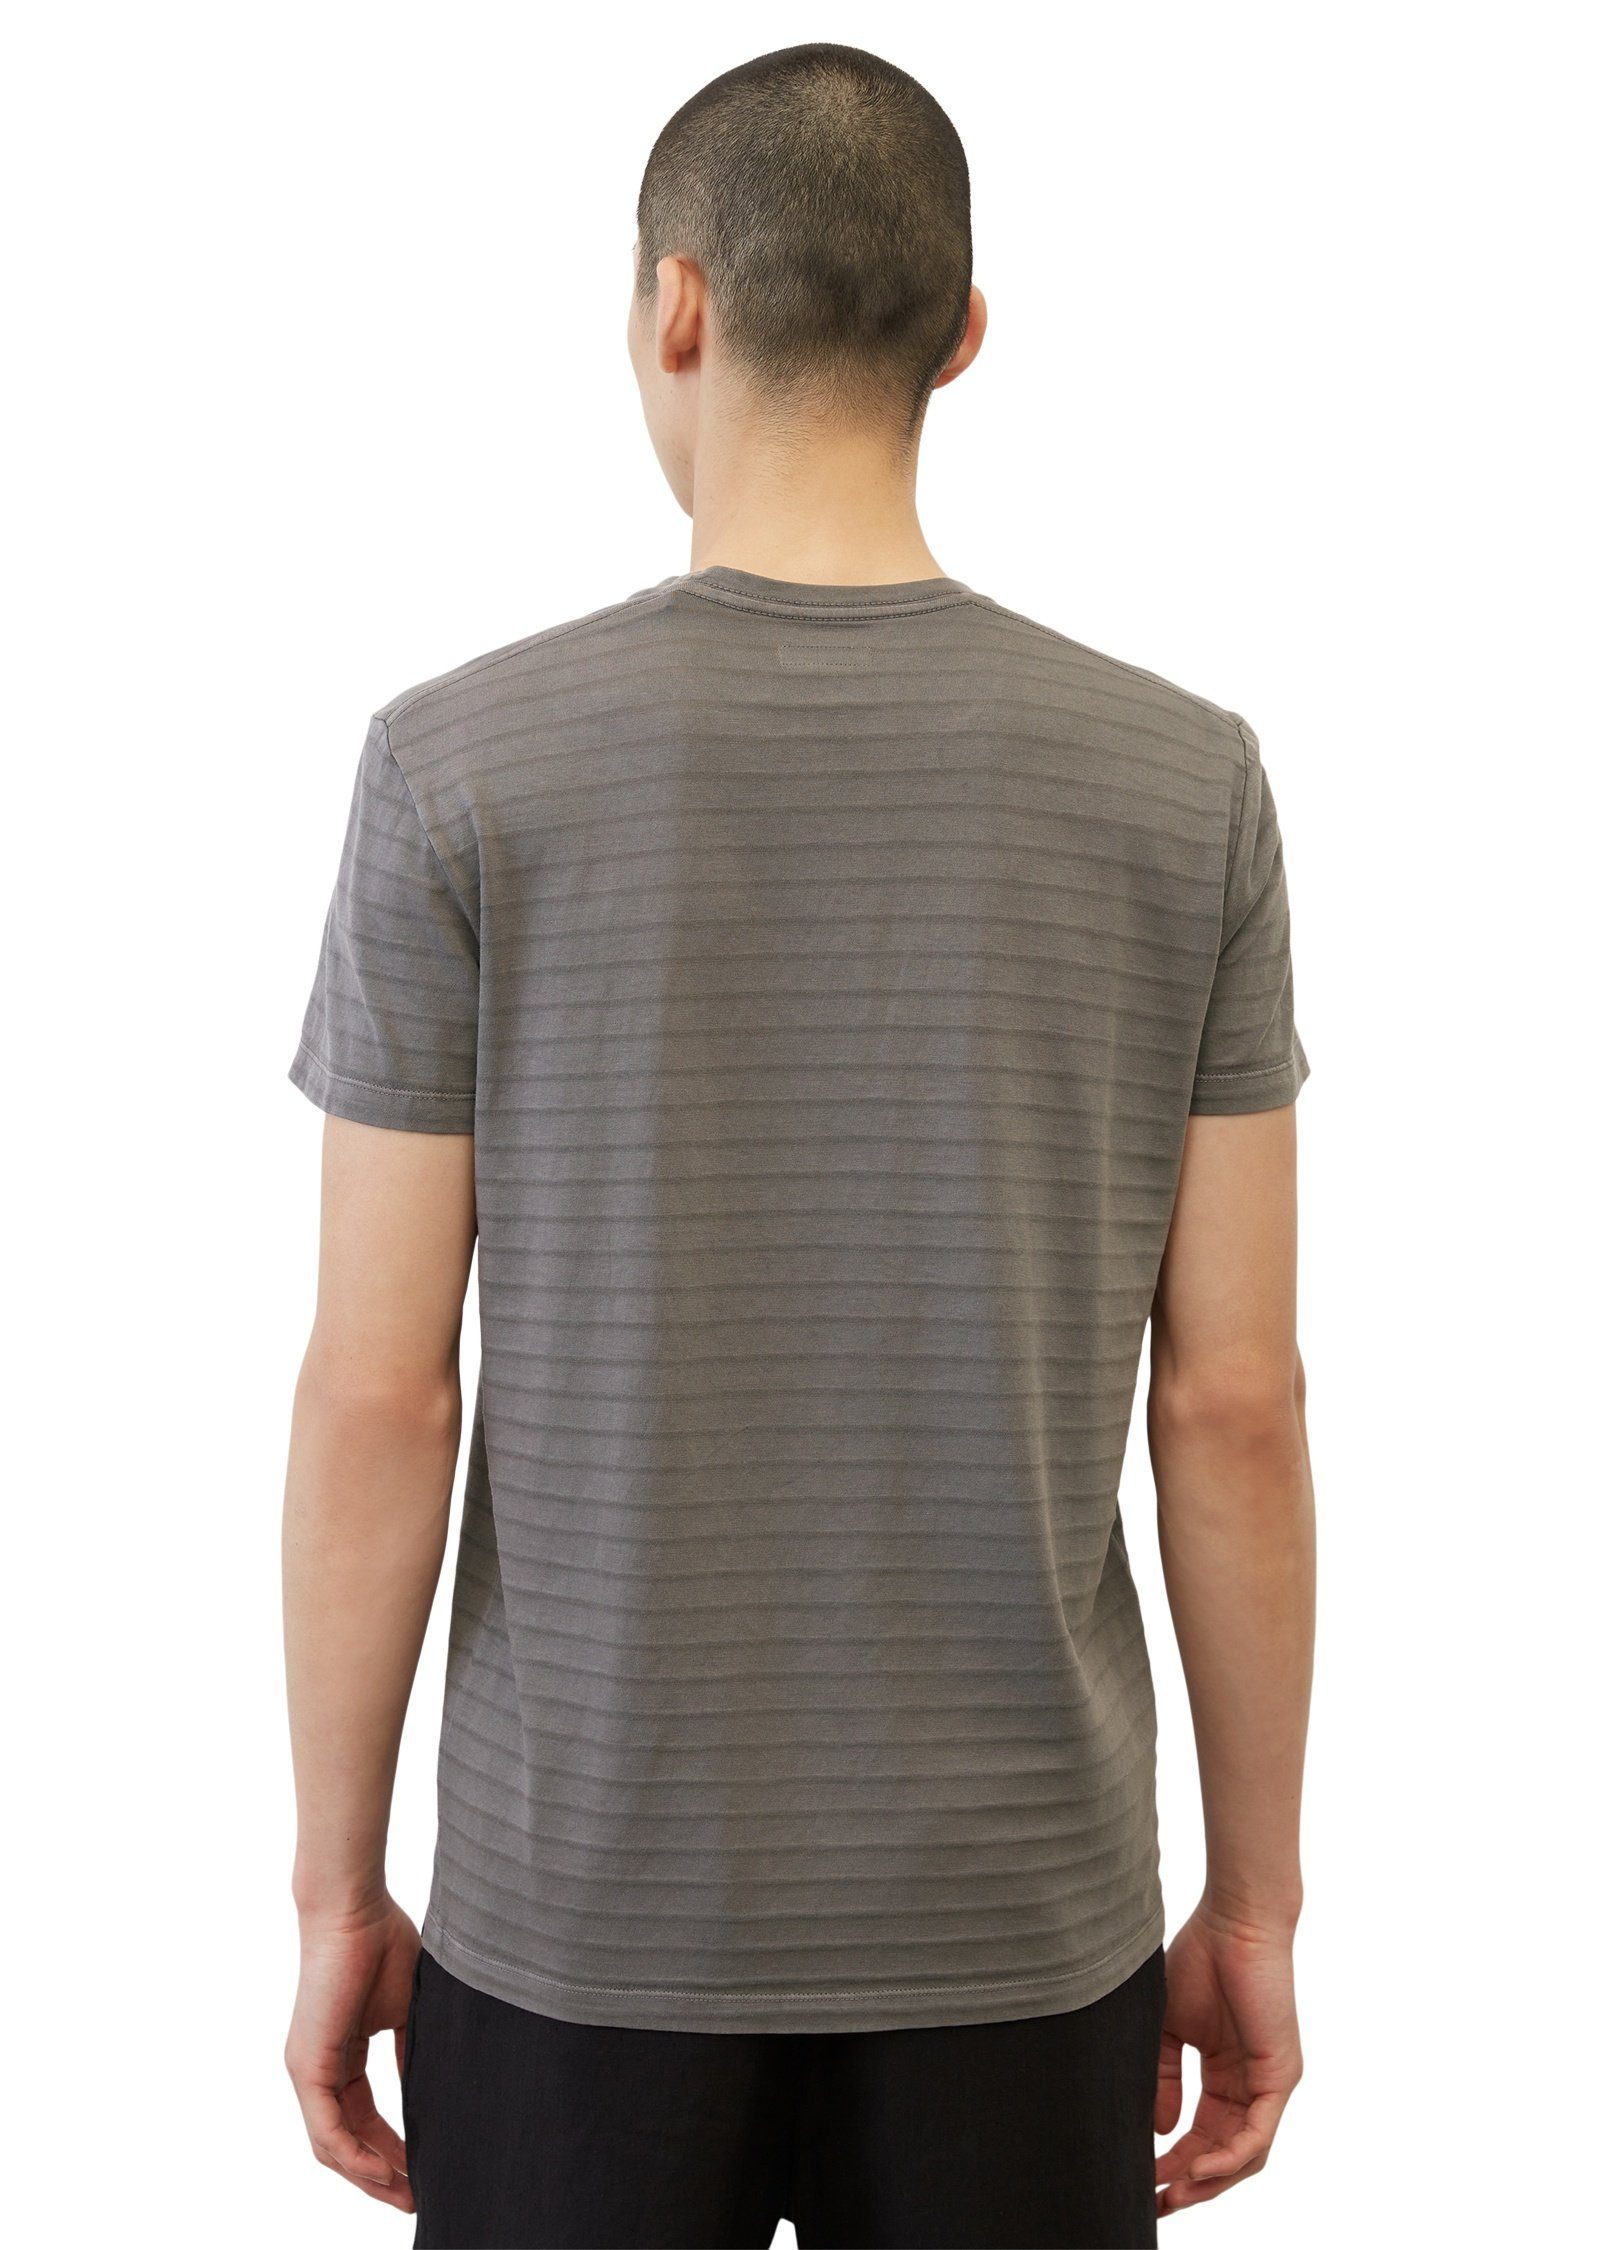 Cold-dye-Färbung mit O'Polo T-Shirt Marc grau